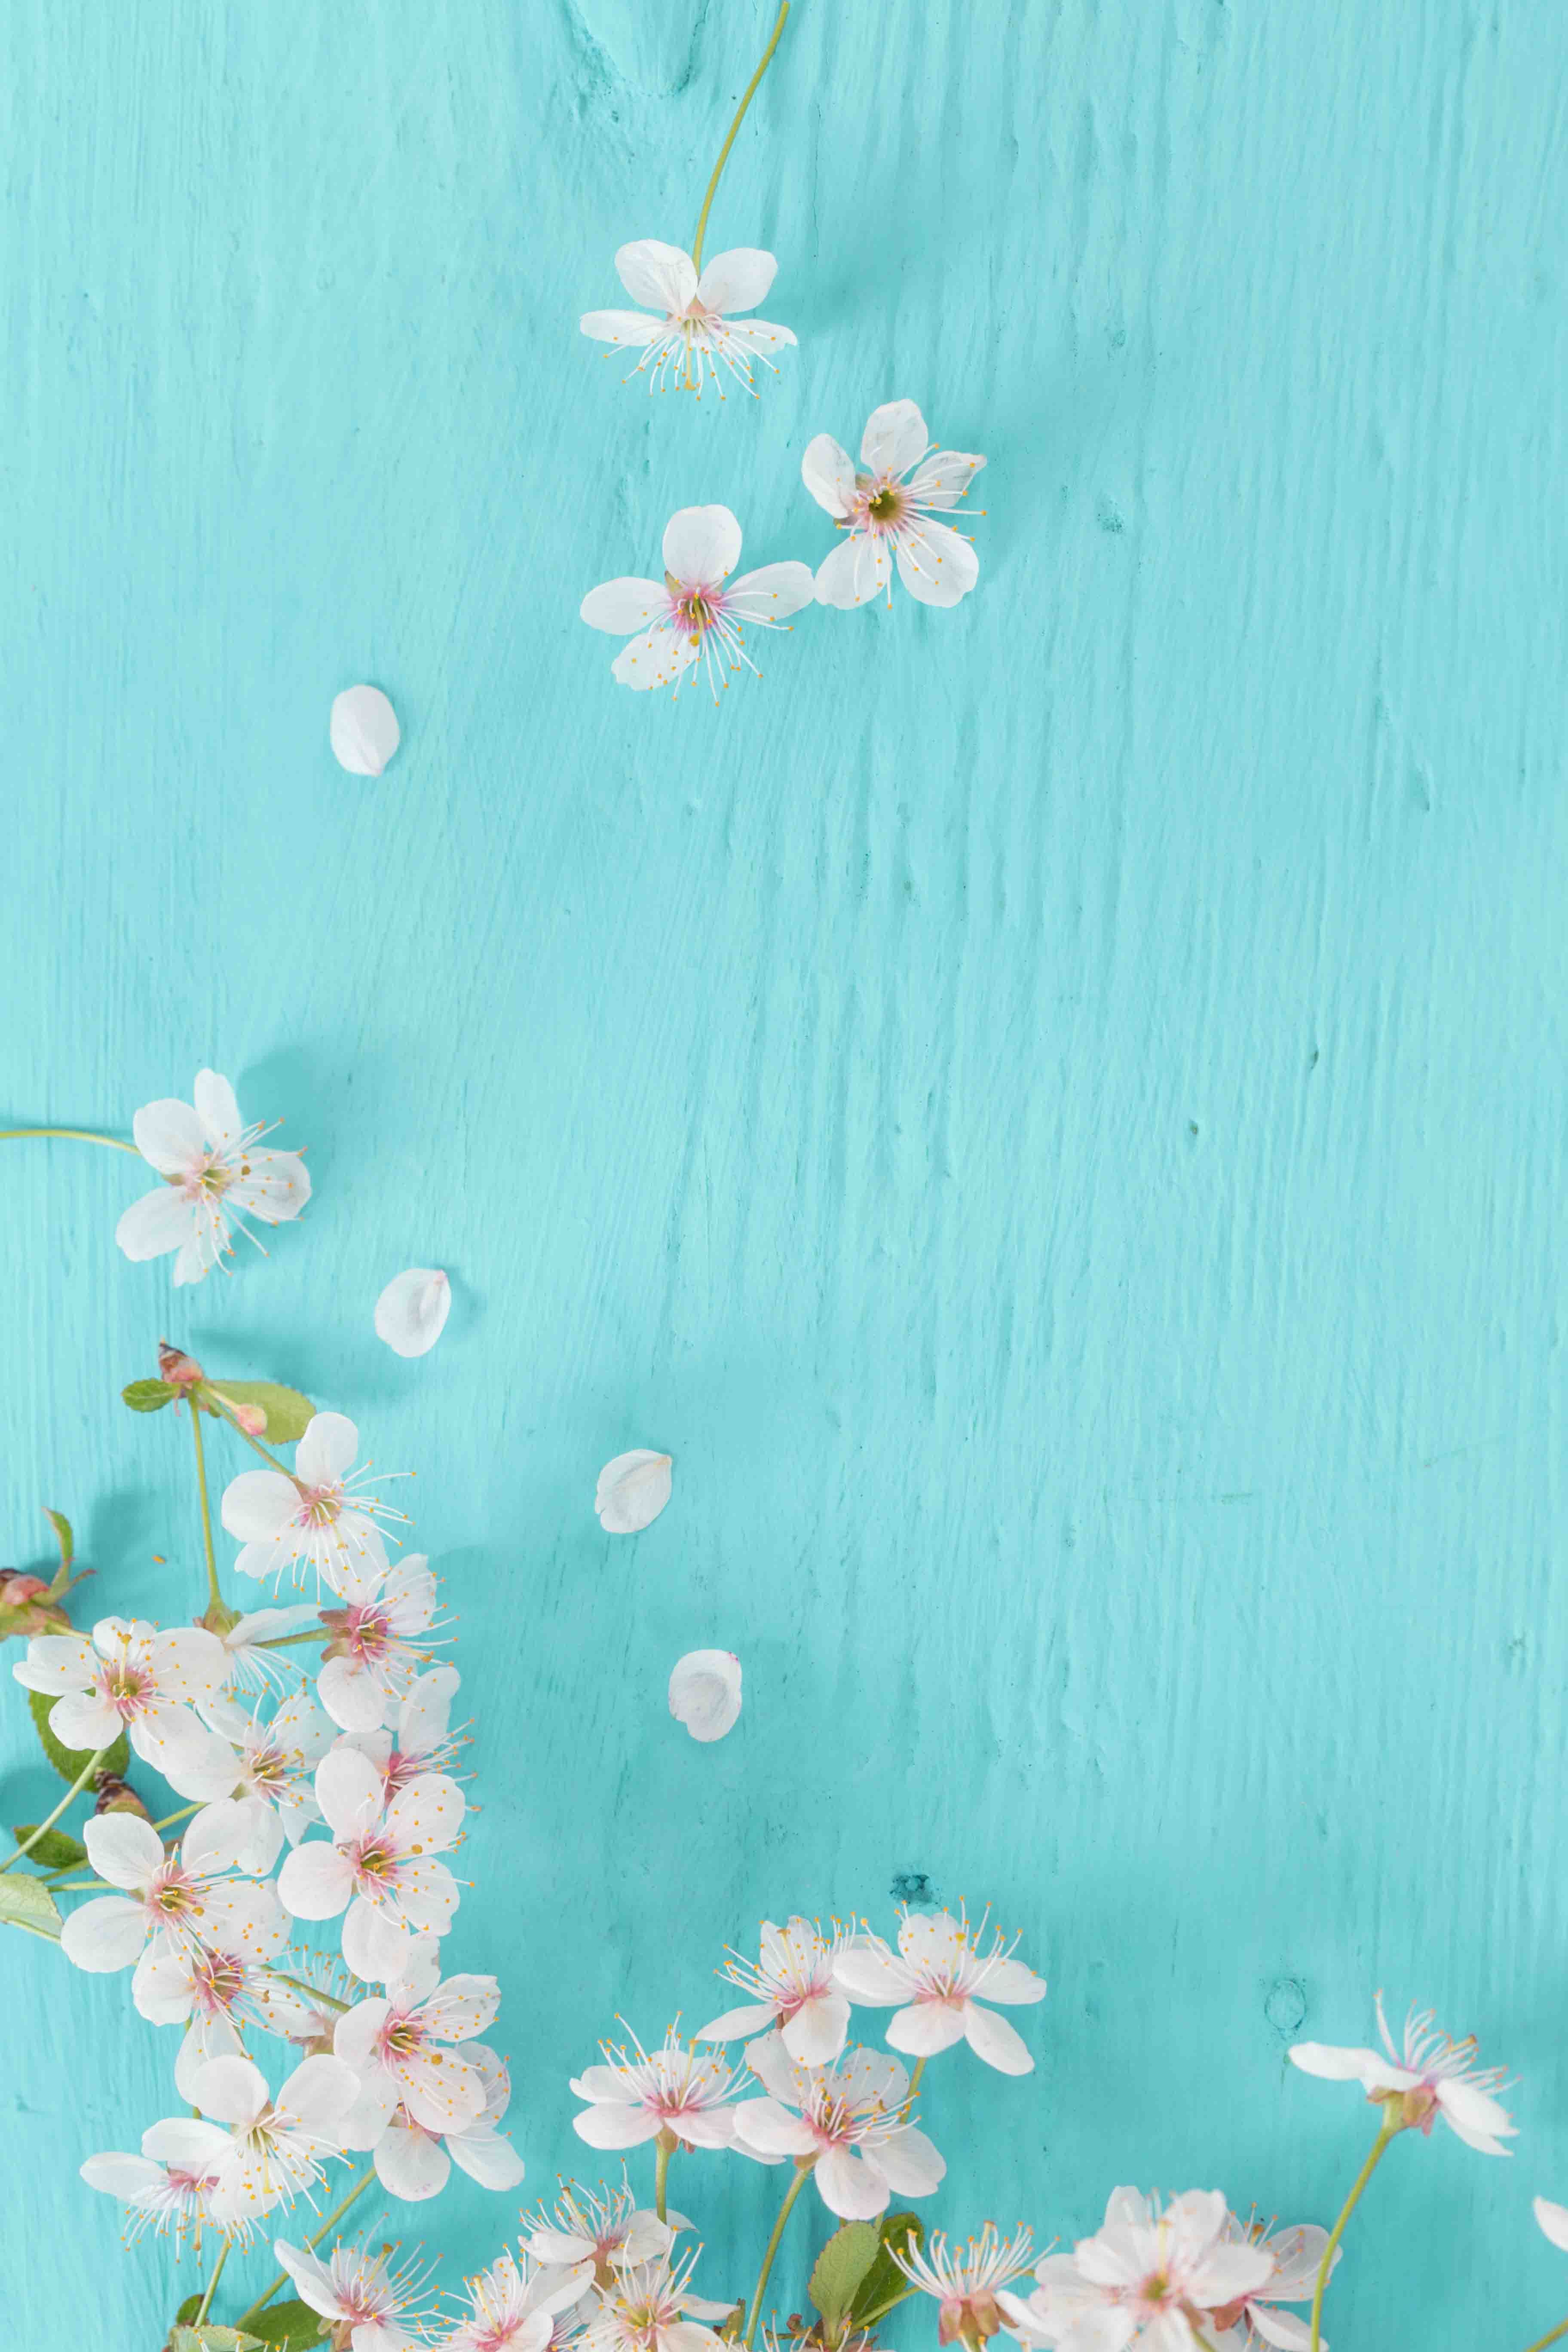 Beautiful Pink Cherry Flowers On Turquoise Blue Wood Board Backdrop Shopbackdrop